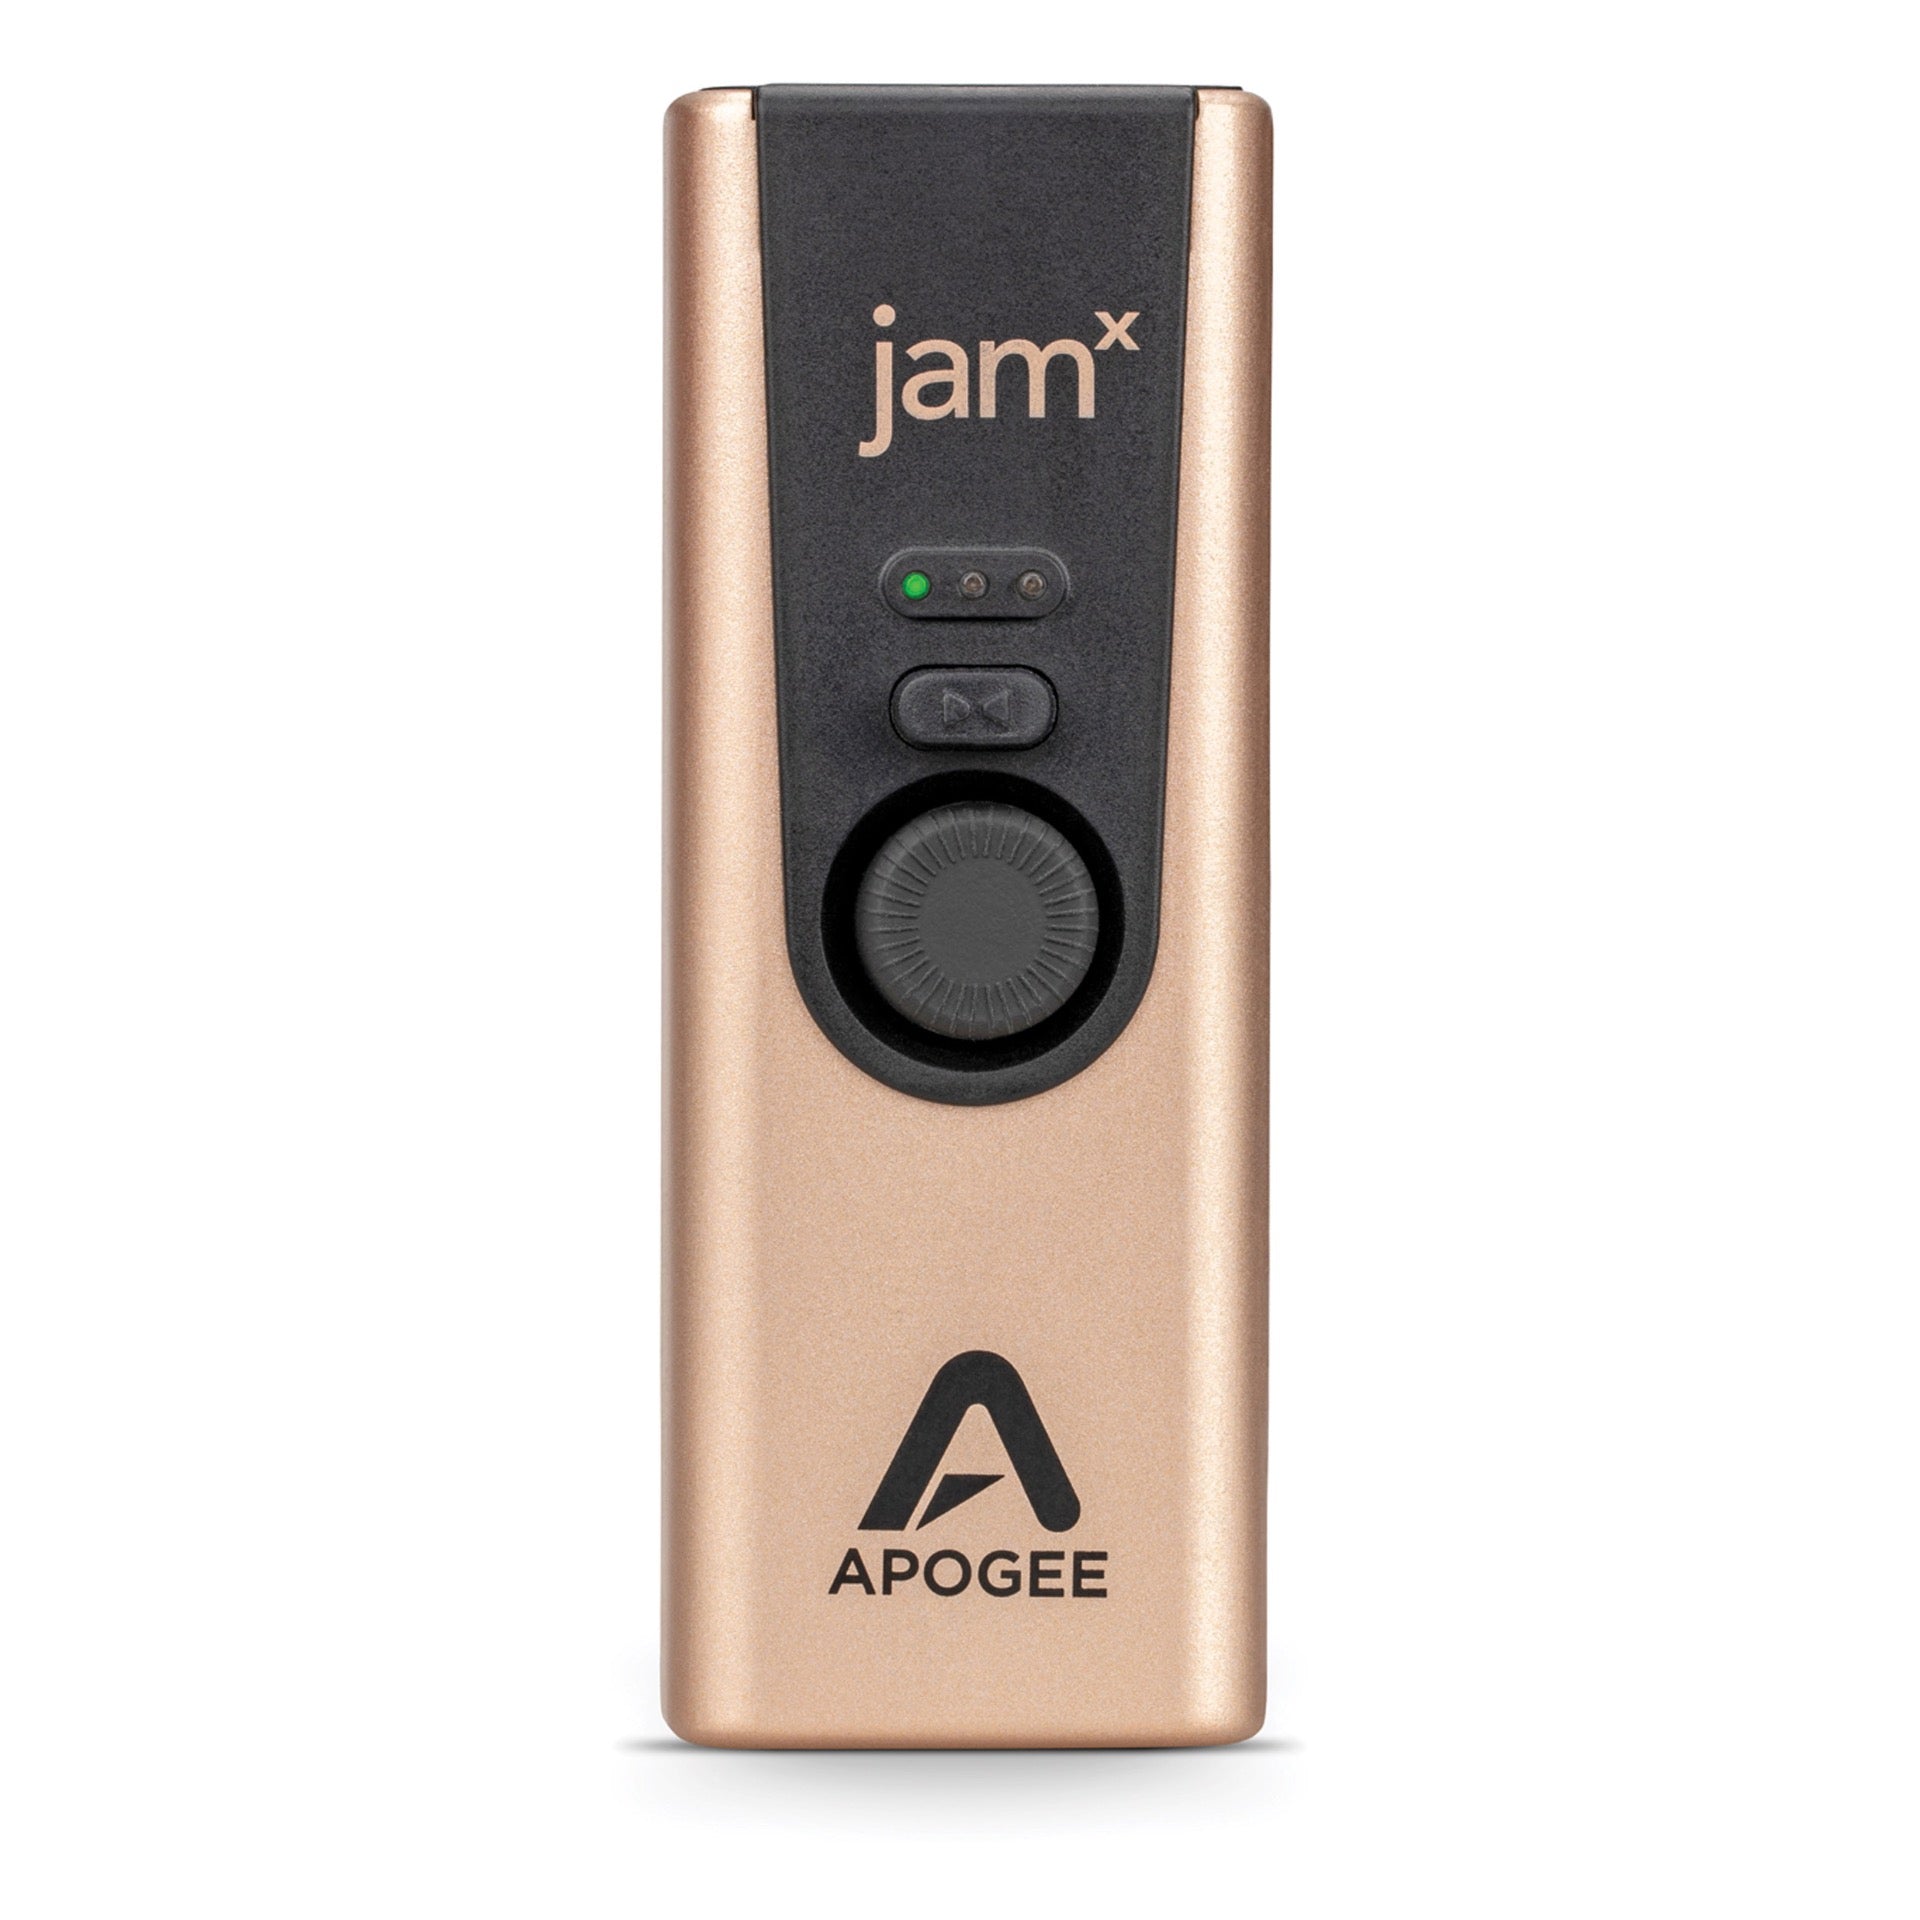 Apogee Jam X 1x2 USB Audio Interface with Analog Compression